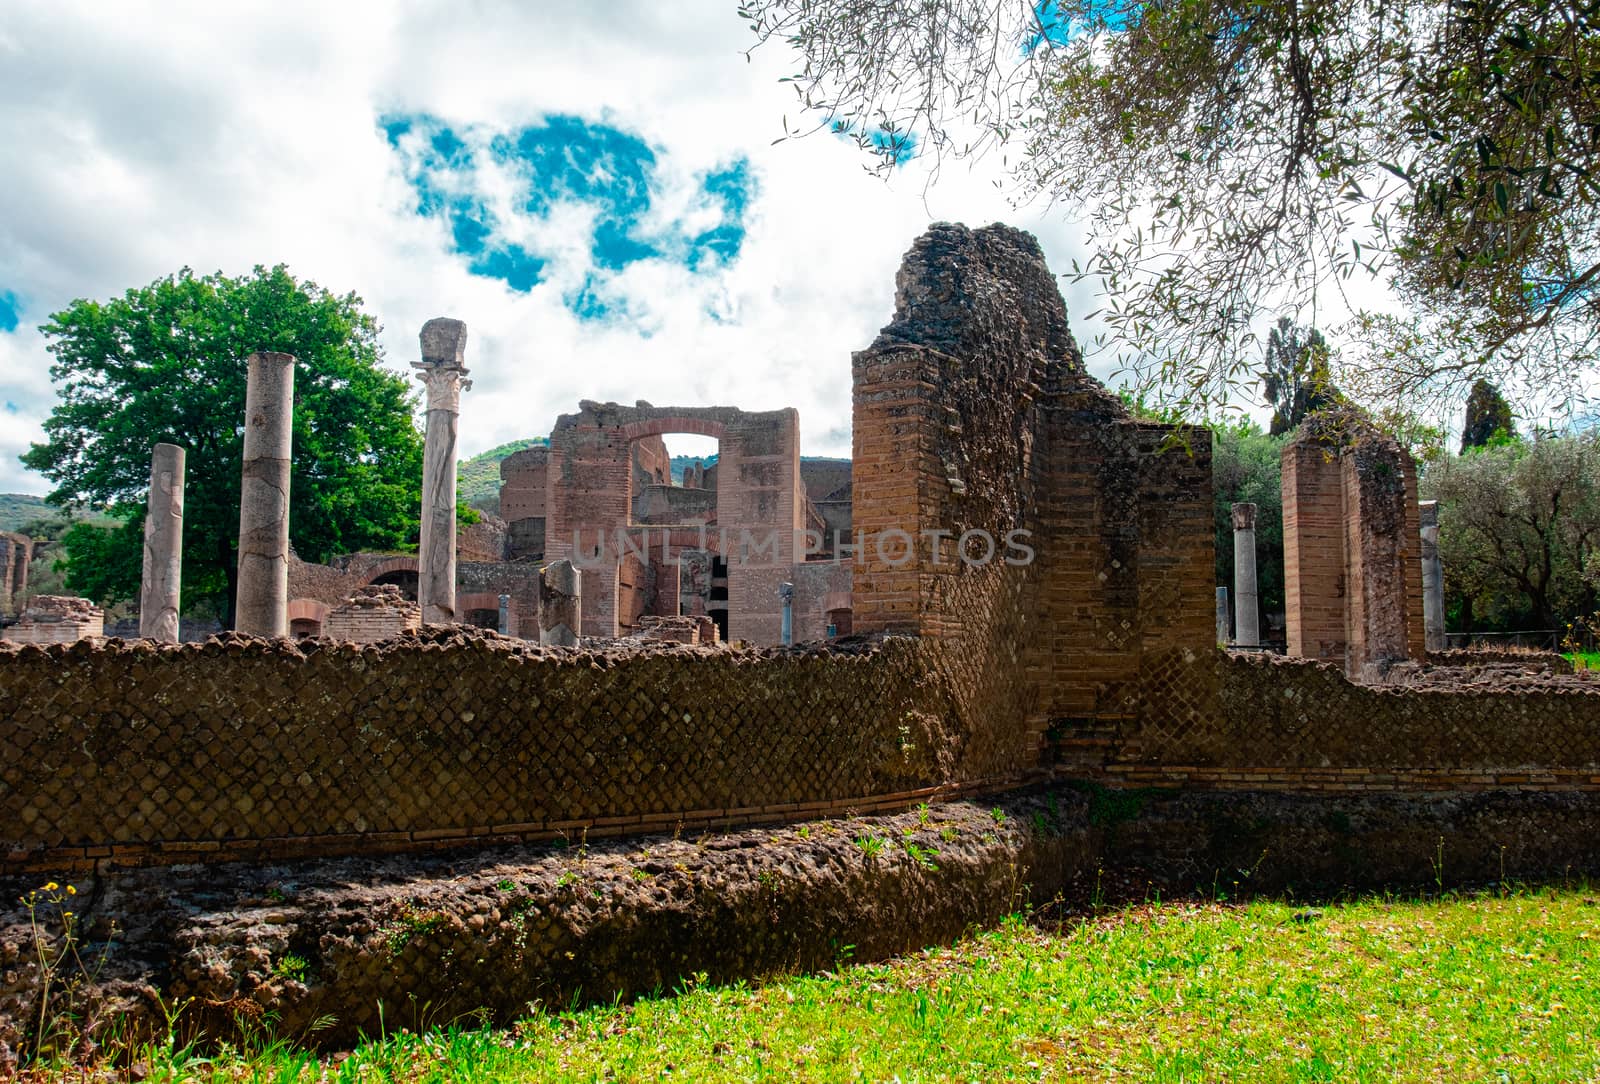 Villa Adriana in Tivoli Rome - Lazio Italy - The Three Exedras building ruins in Hardrians Villa archaeological site of Unesco .